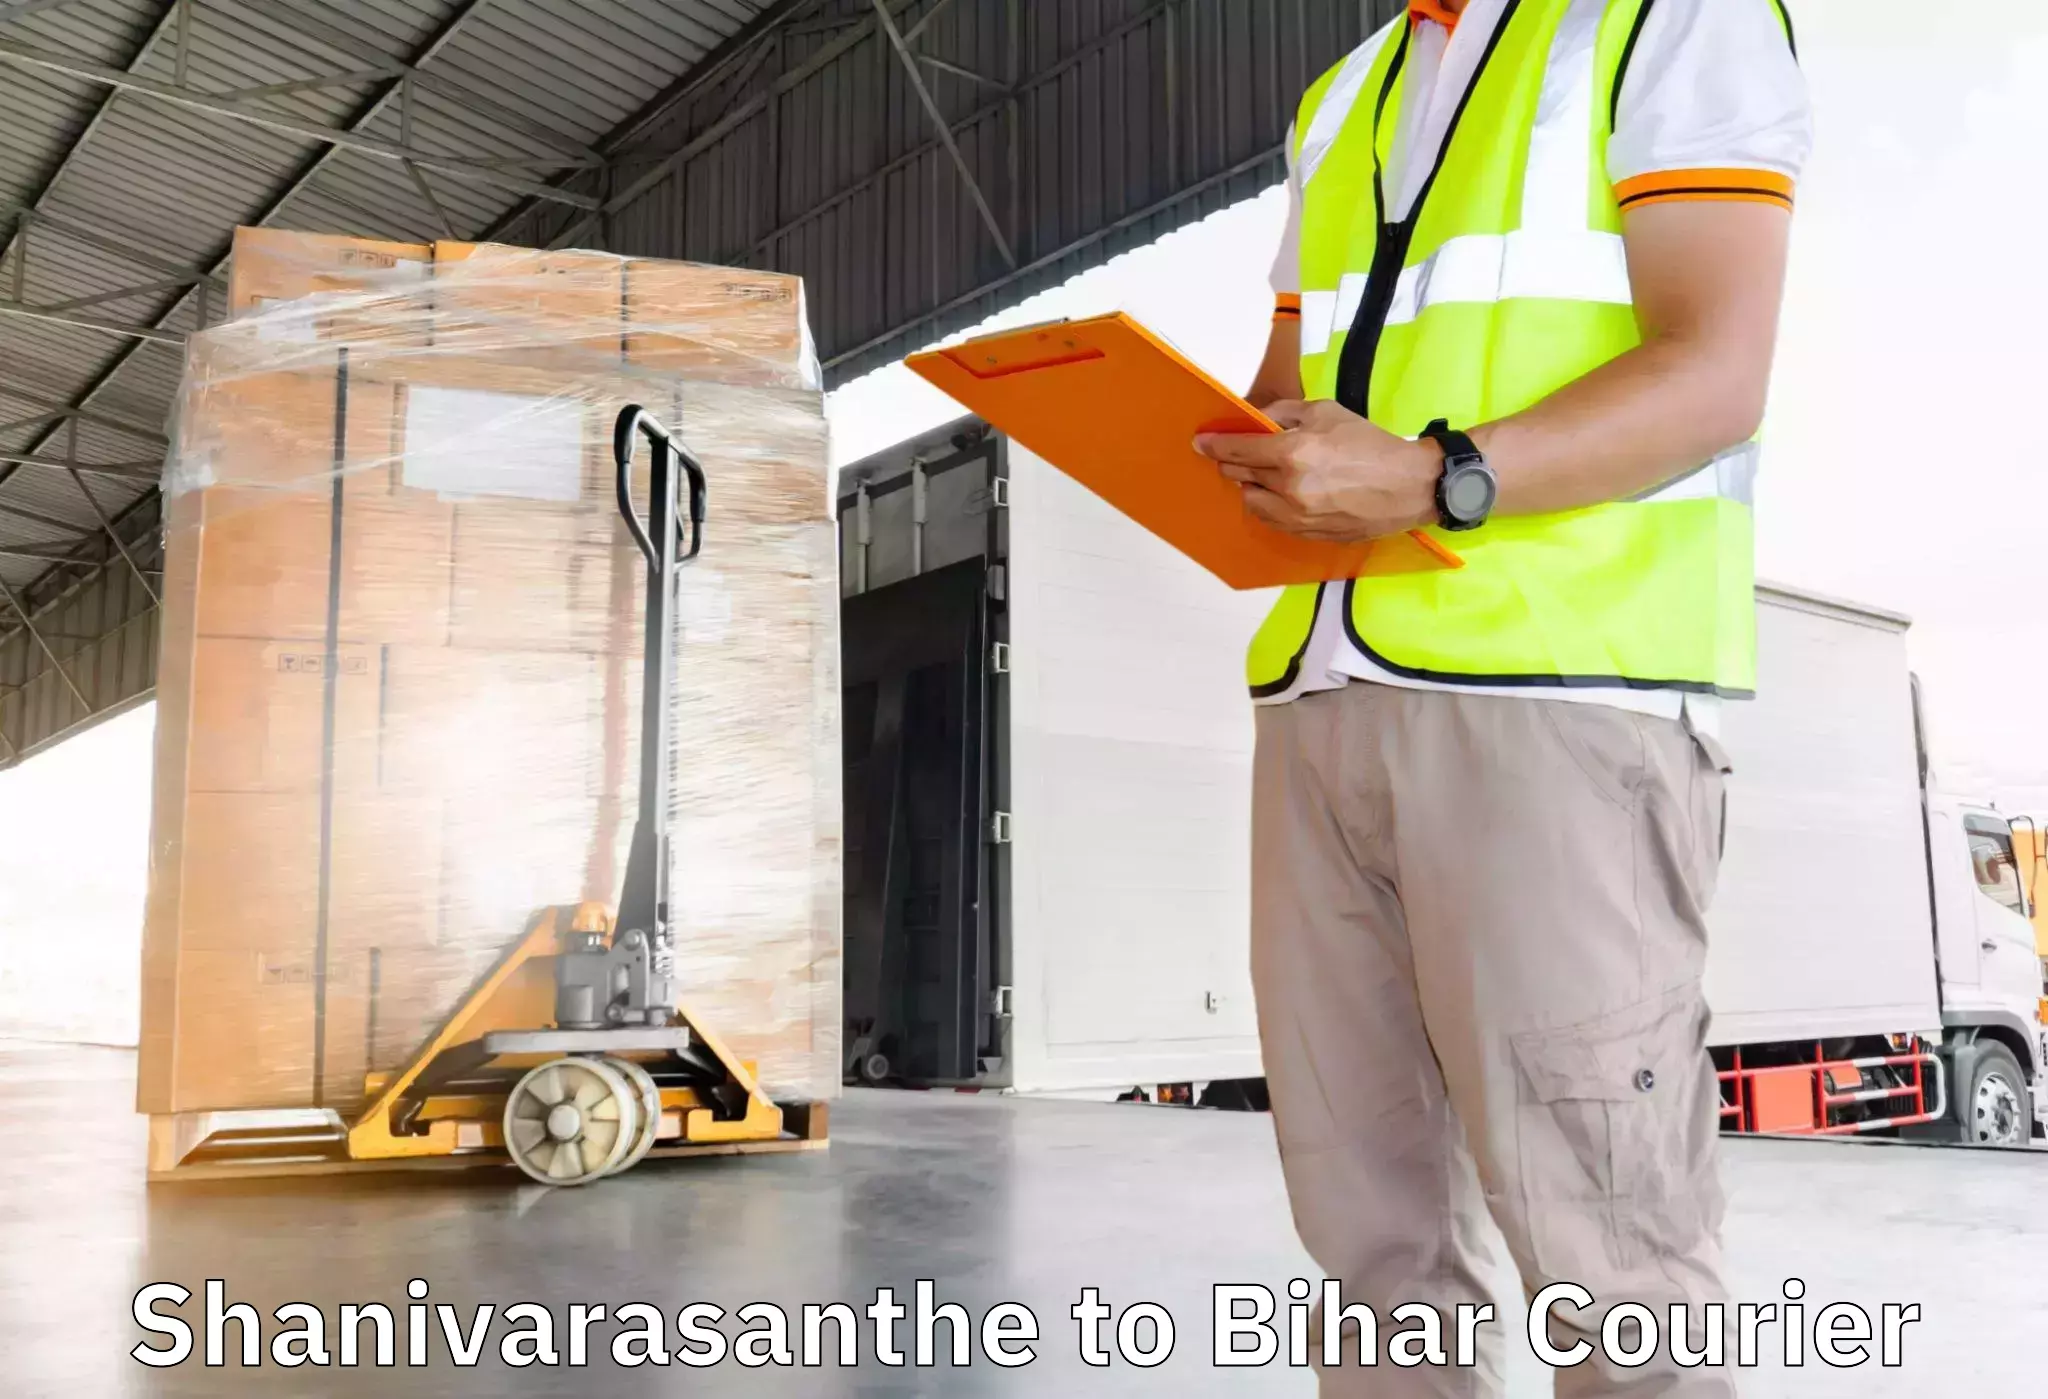 Professional moving company Shanivarasanthe to Bihar